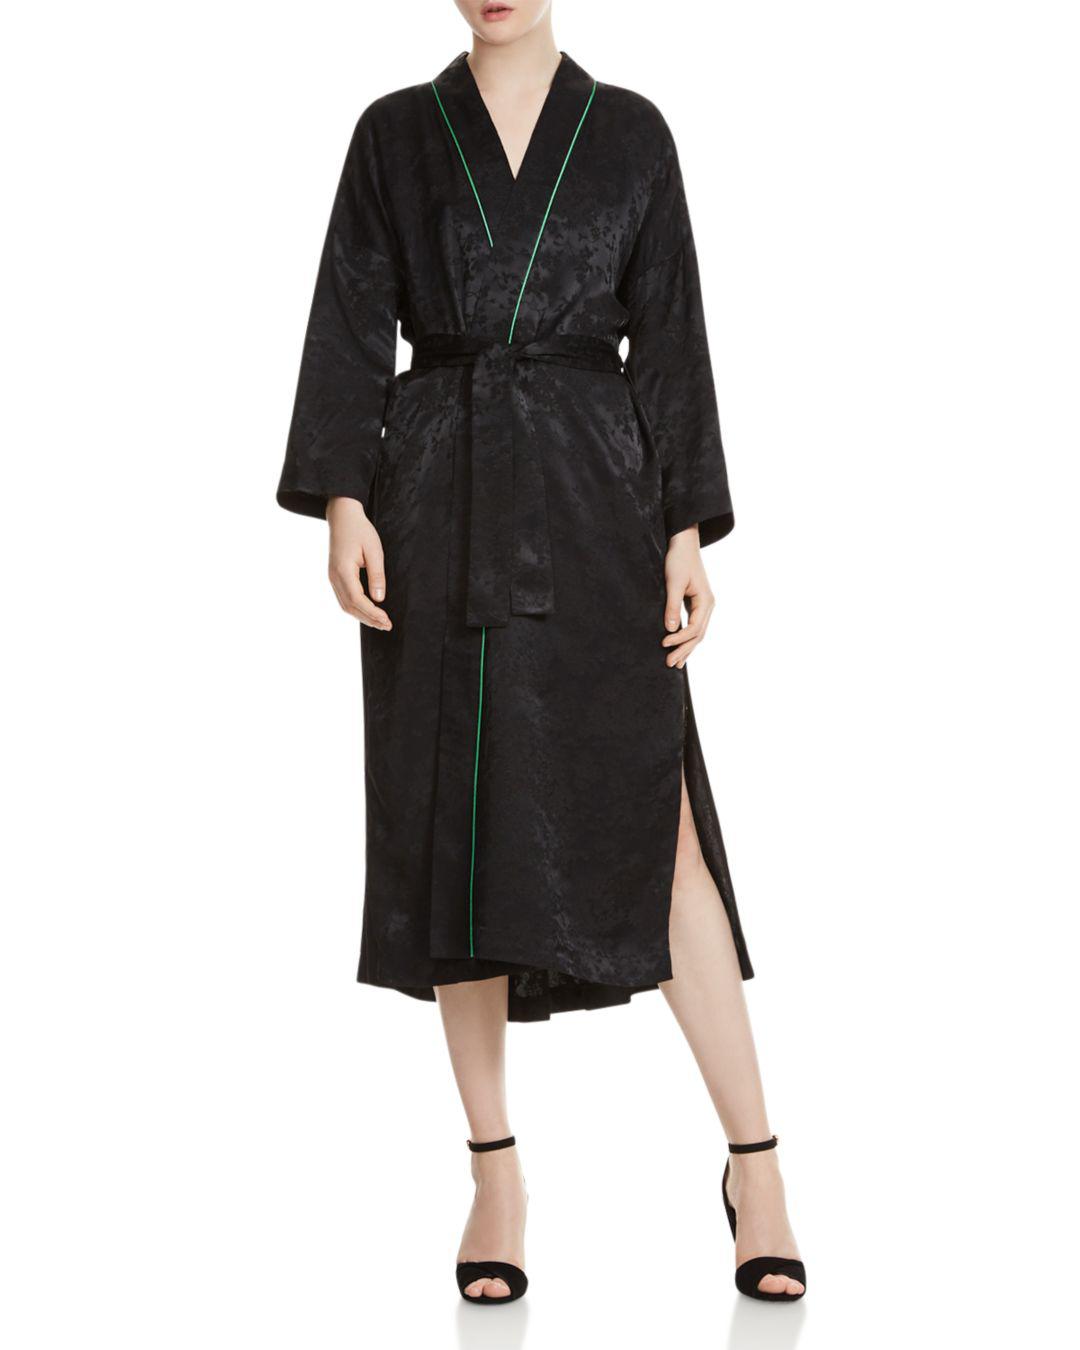 Maje Vasita Jacquard Long Kimono Jacket in Black - Lyst